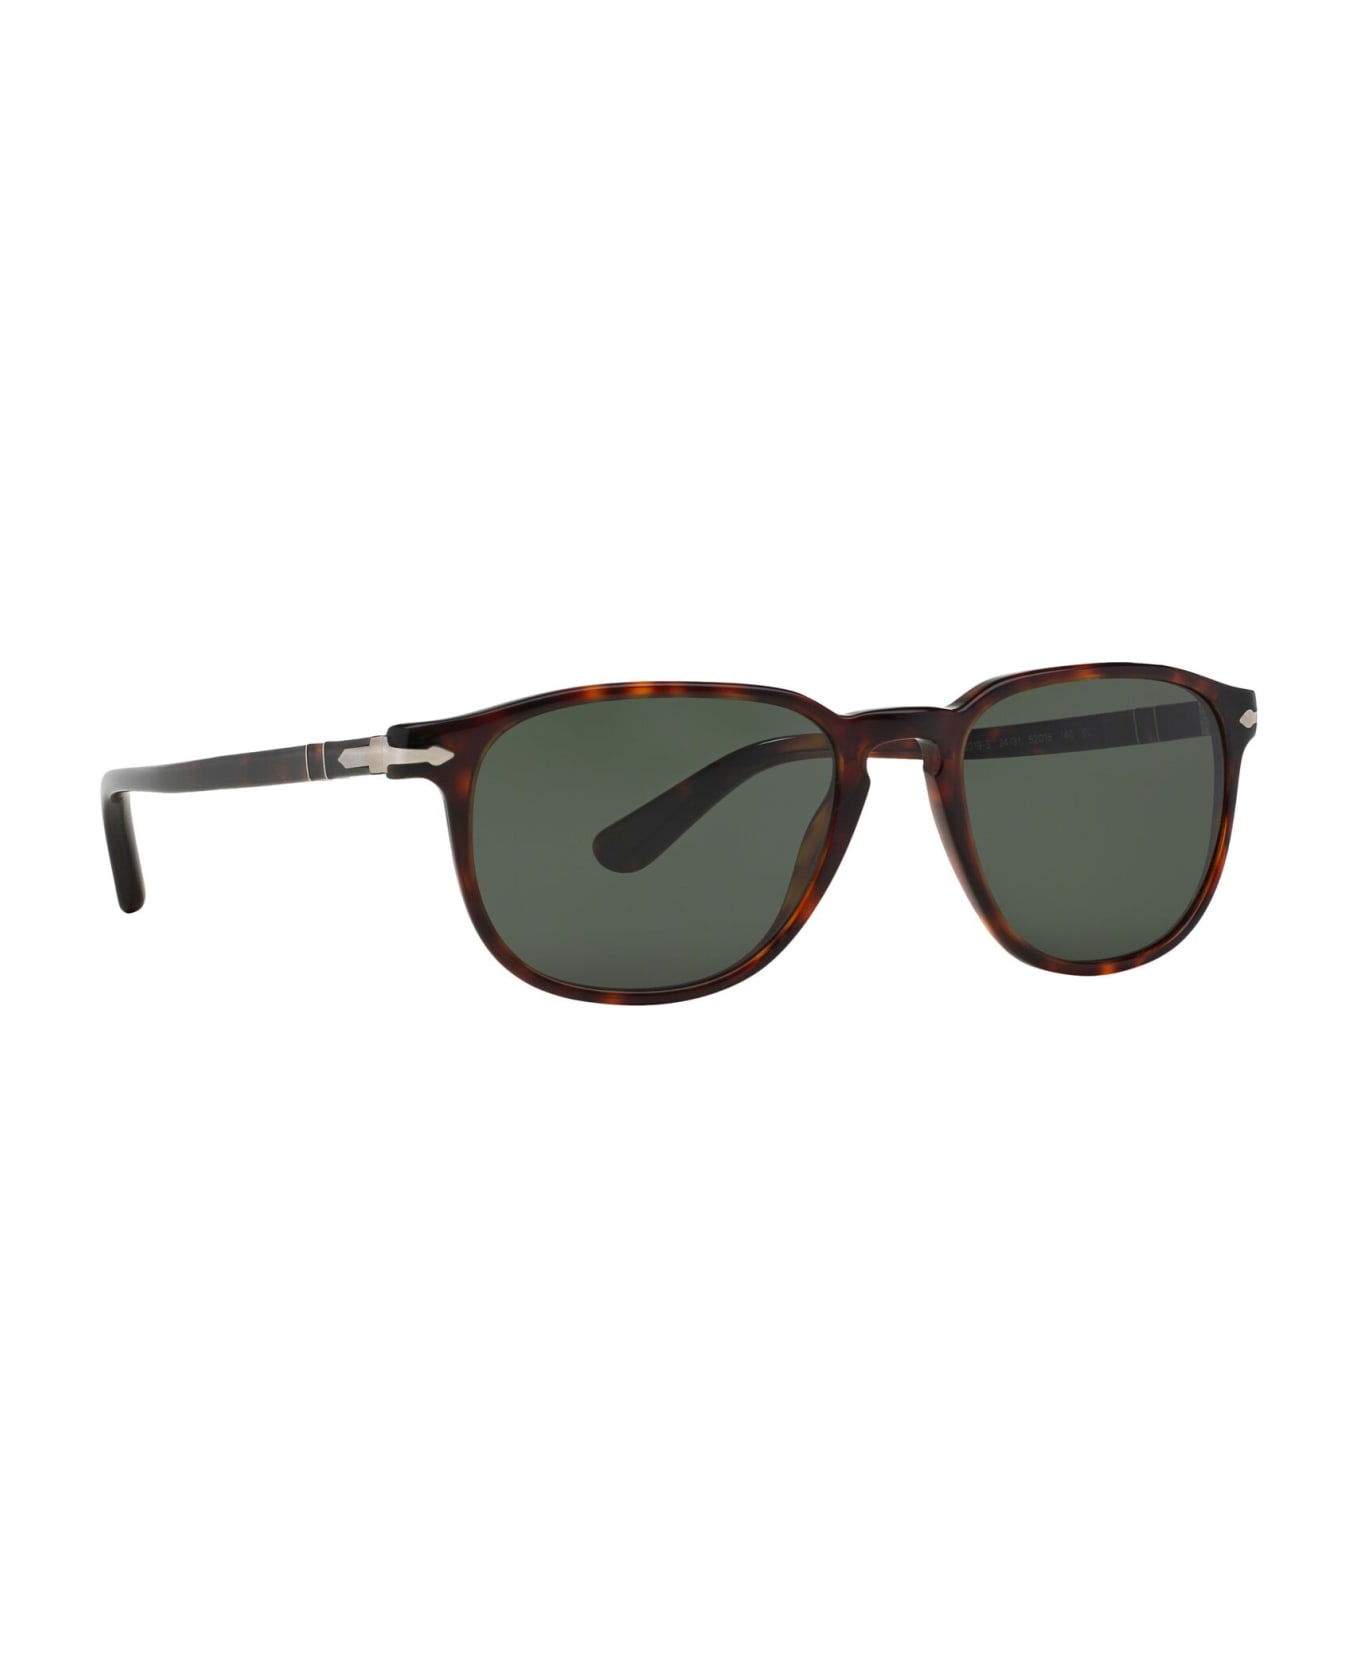 Persol Sunglasses - Marrone tartarugato/Verde サングラス